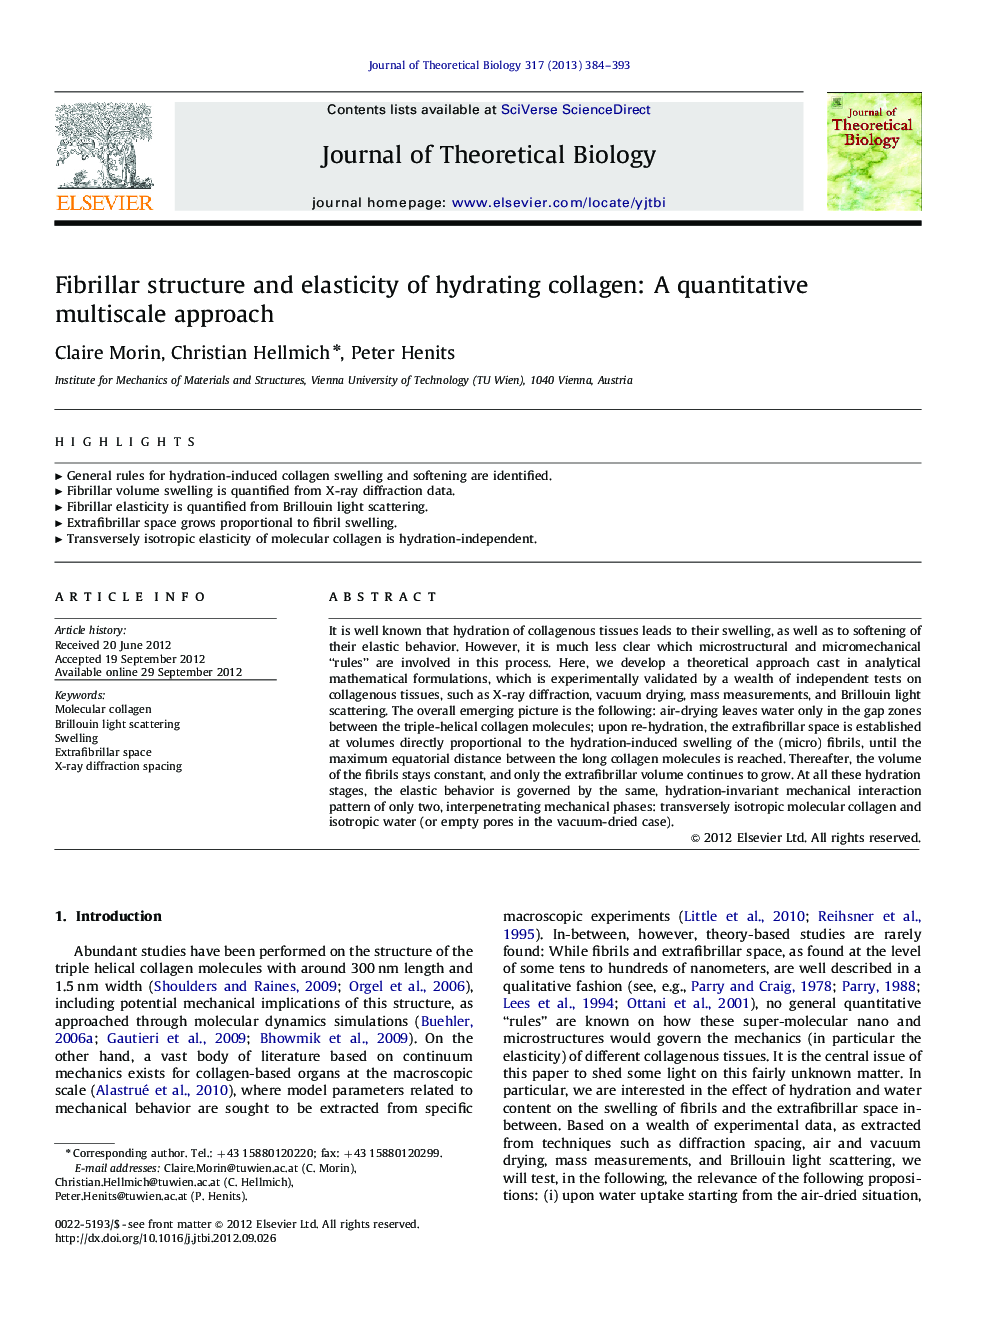 Fibrillar structure and elasticity of hydrating collagen: A quantitative multiscale approach